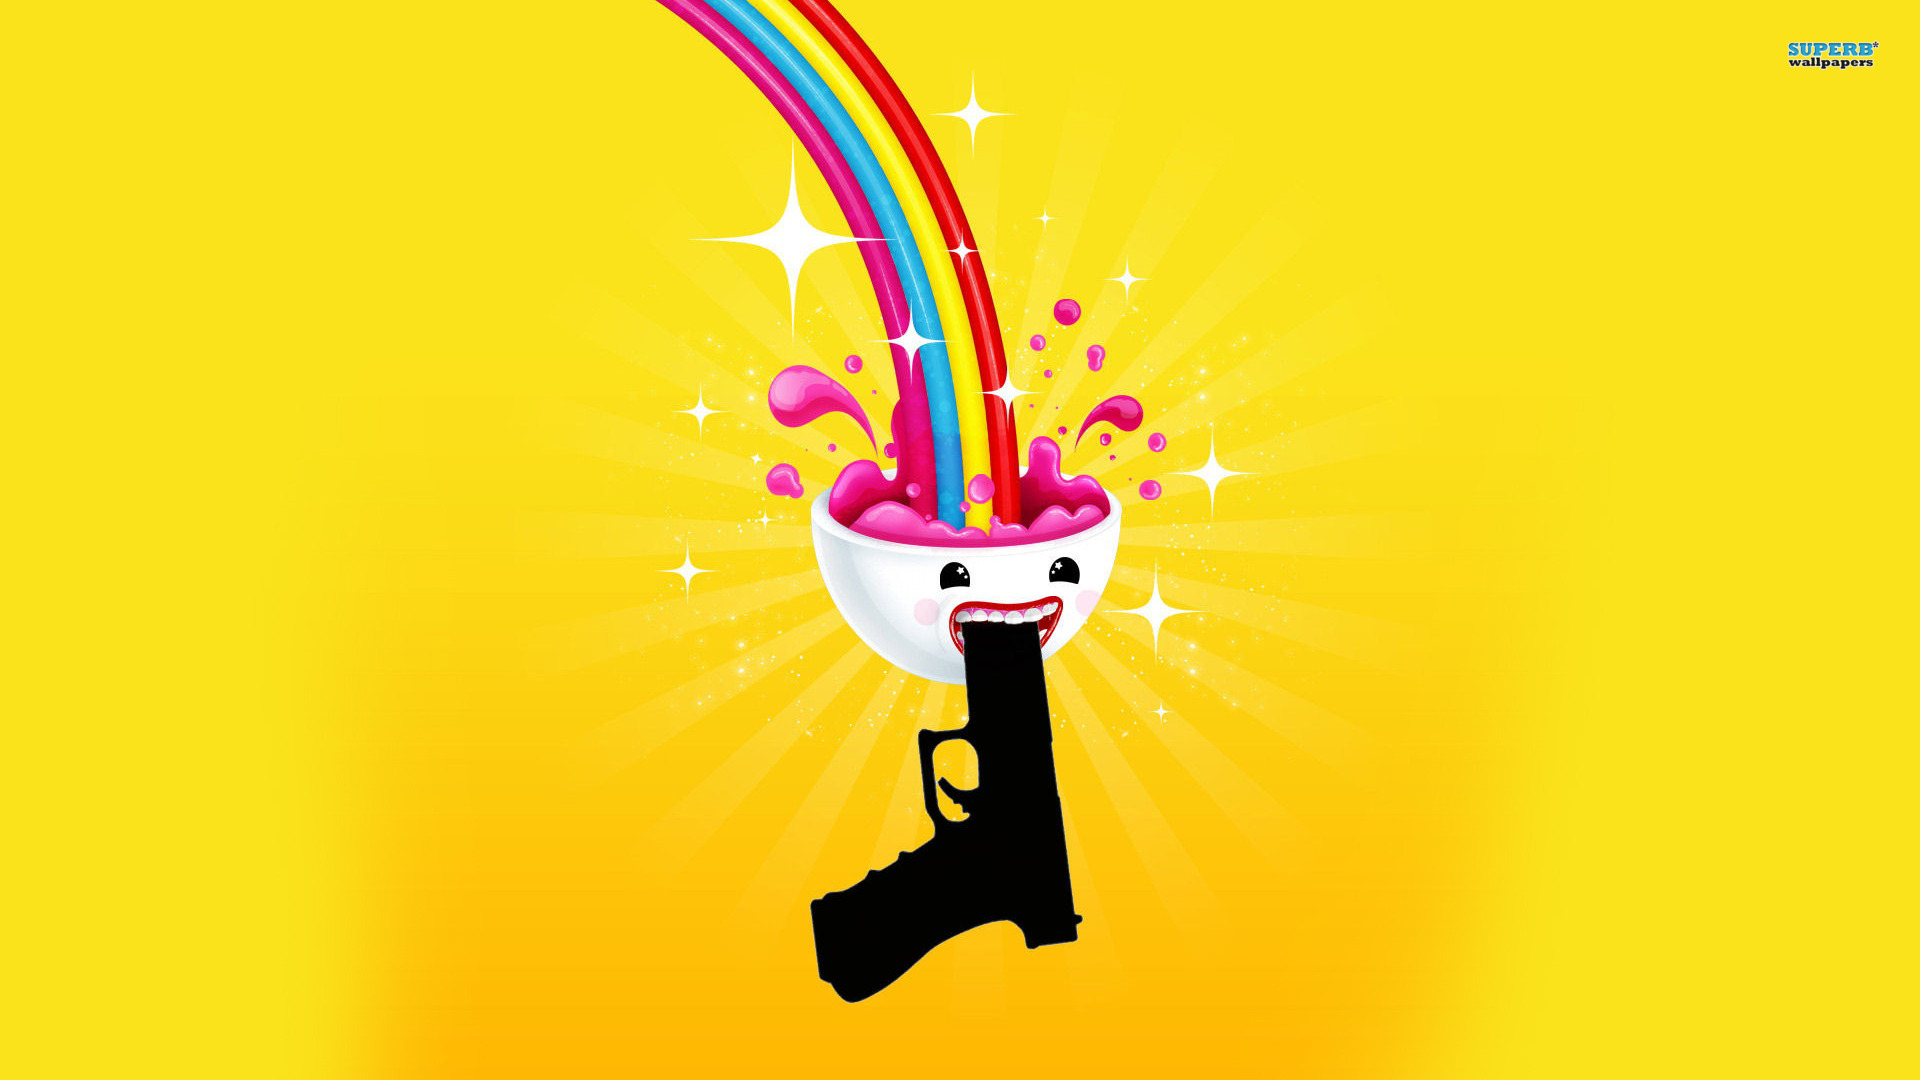 Rainbow brain suicide wallpaper - Funny wallpapers -